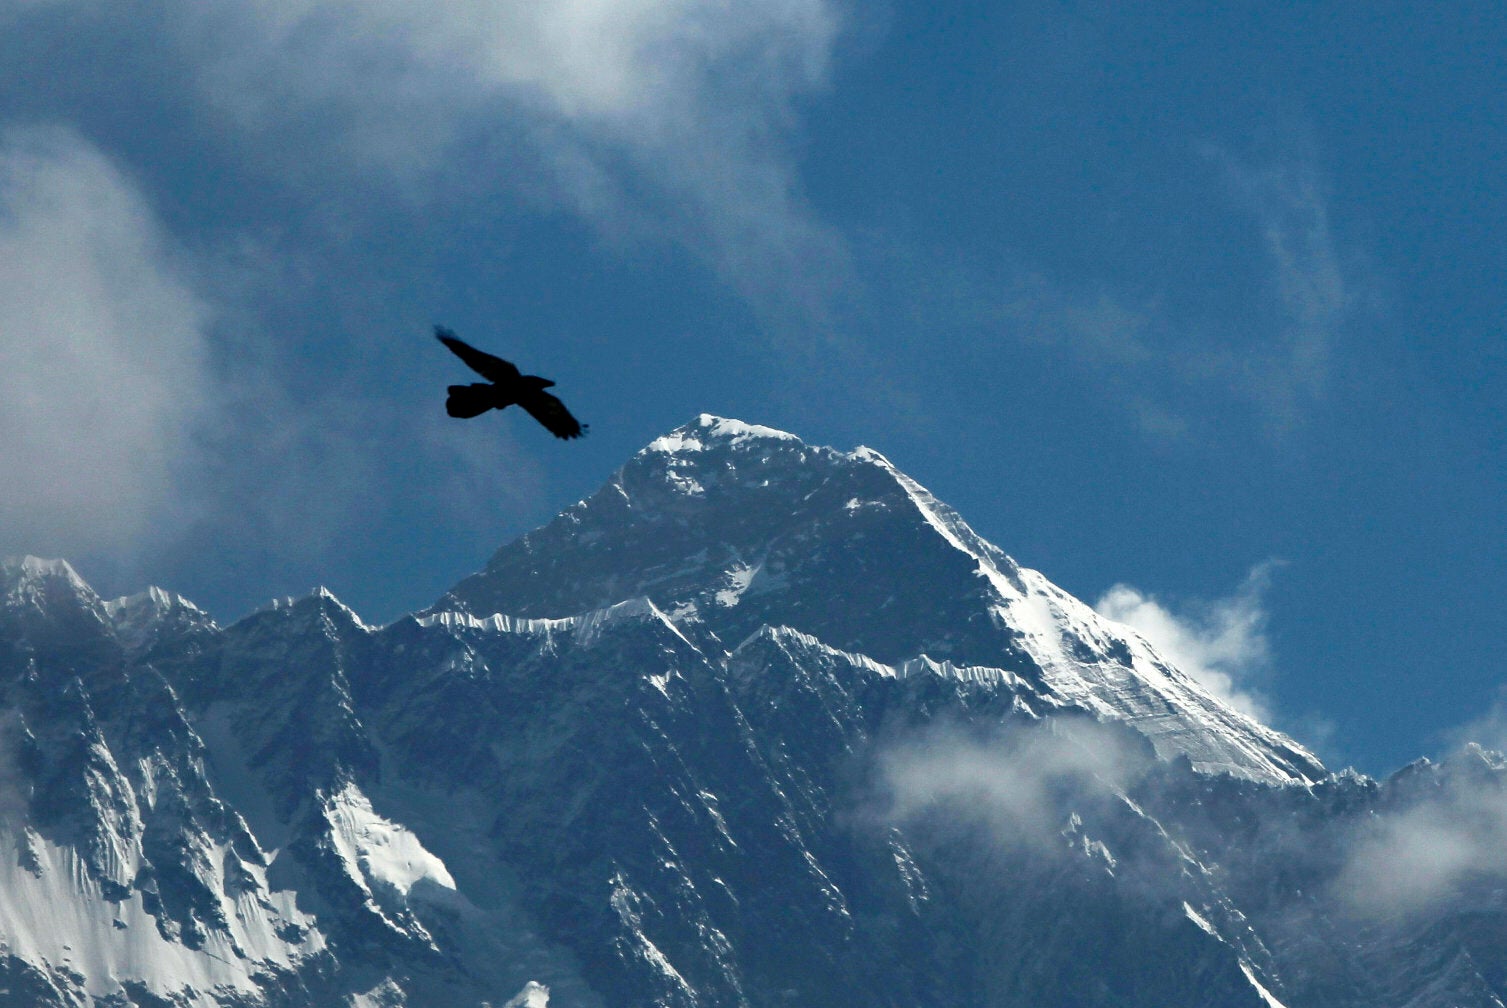 Everest has seen four climbers die this season already